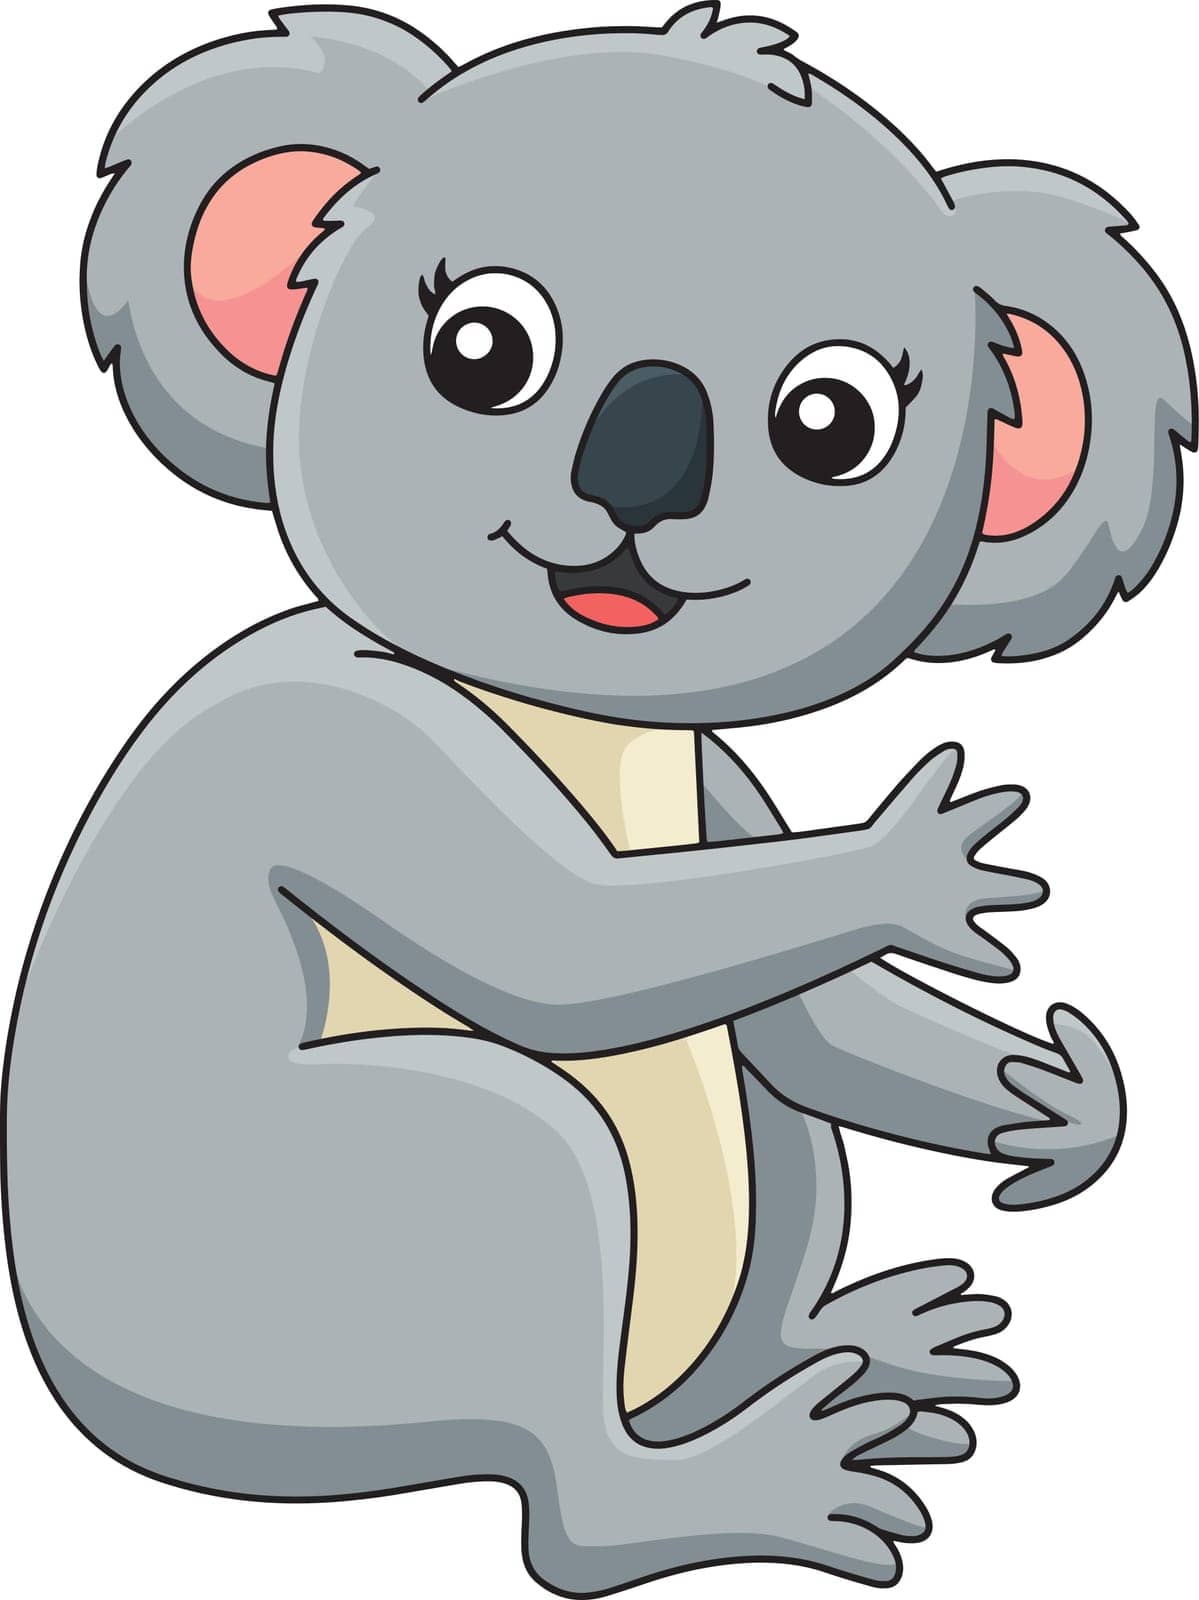 Koala Cartoon Colored Clipart Illustration by abbydesign